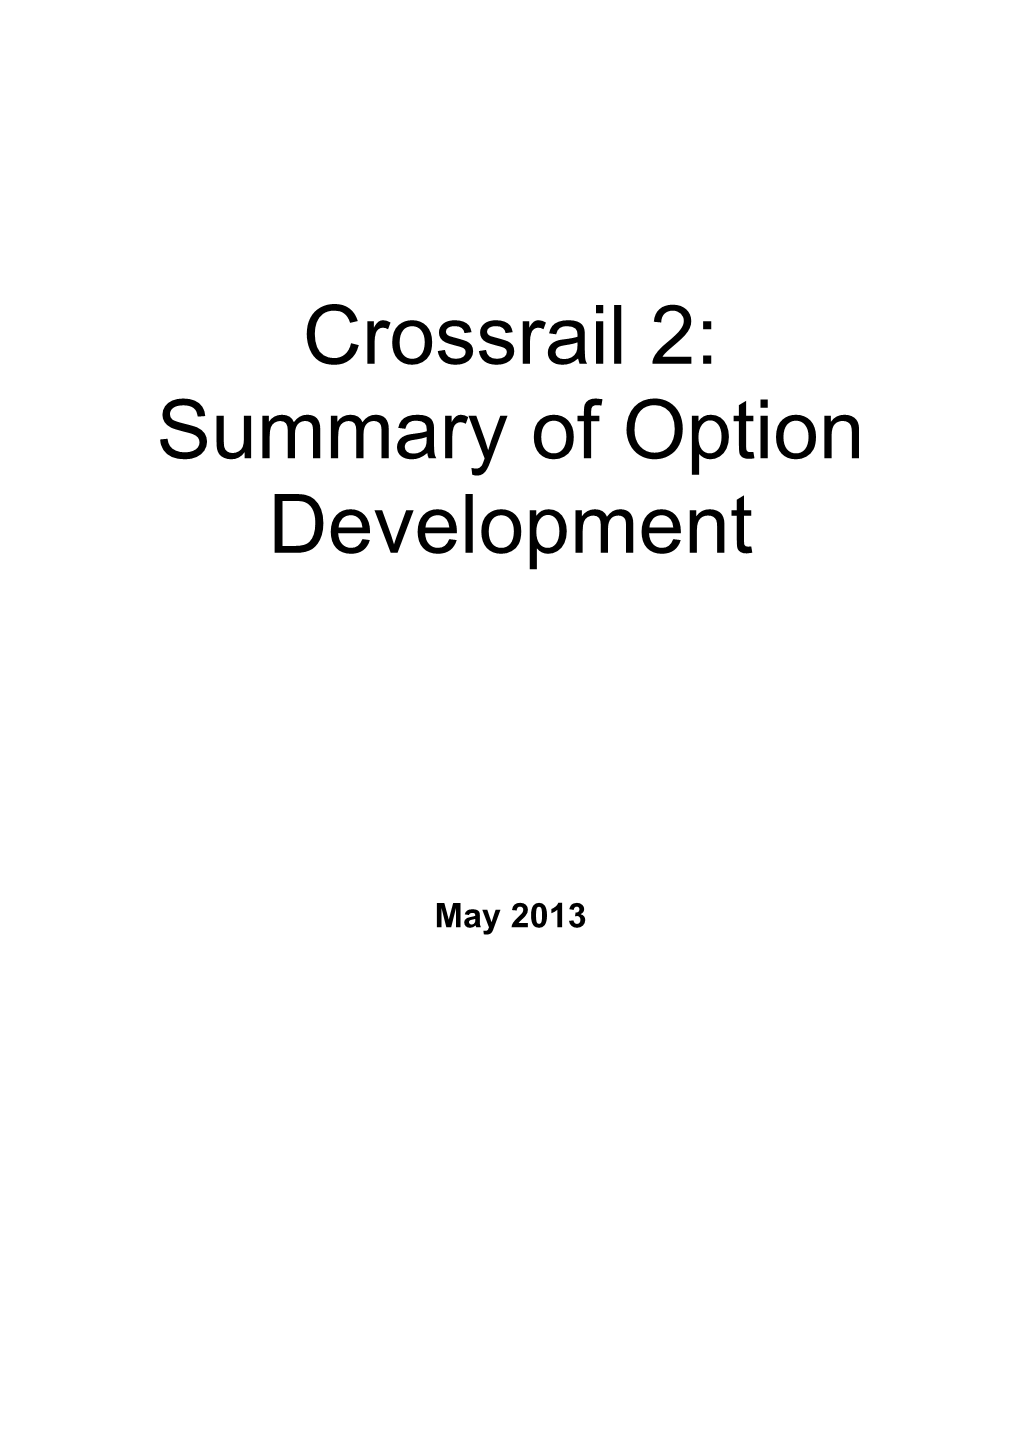 Crossrail 2: Summary of Option Development